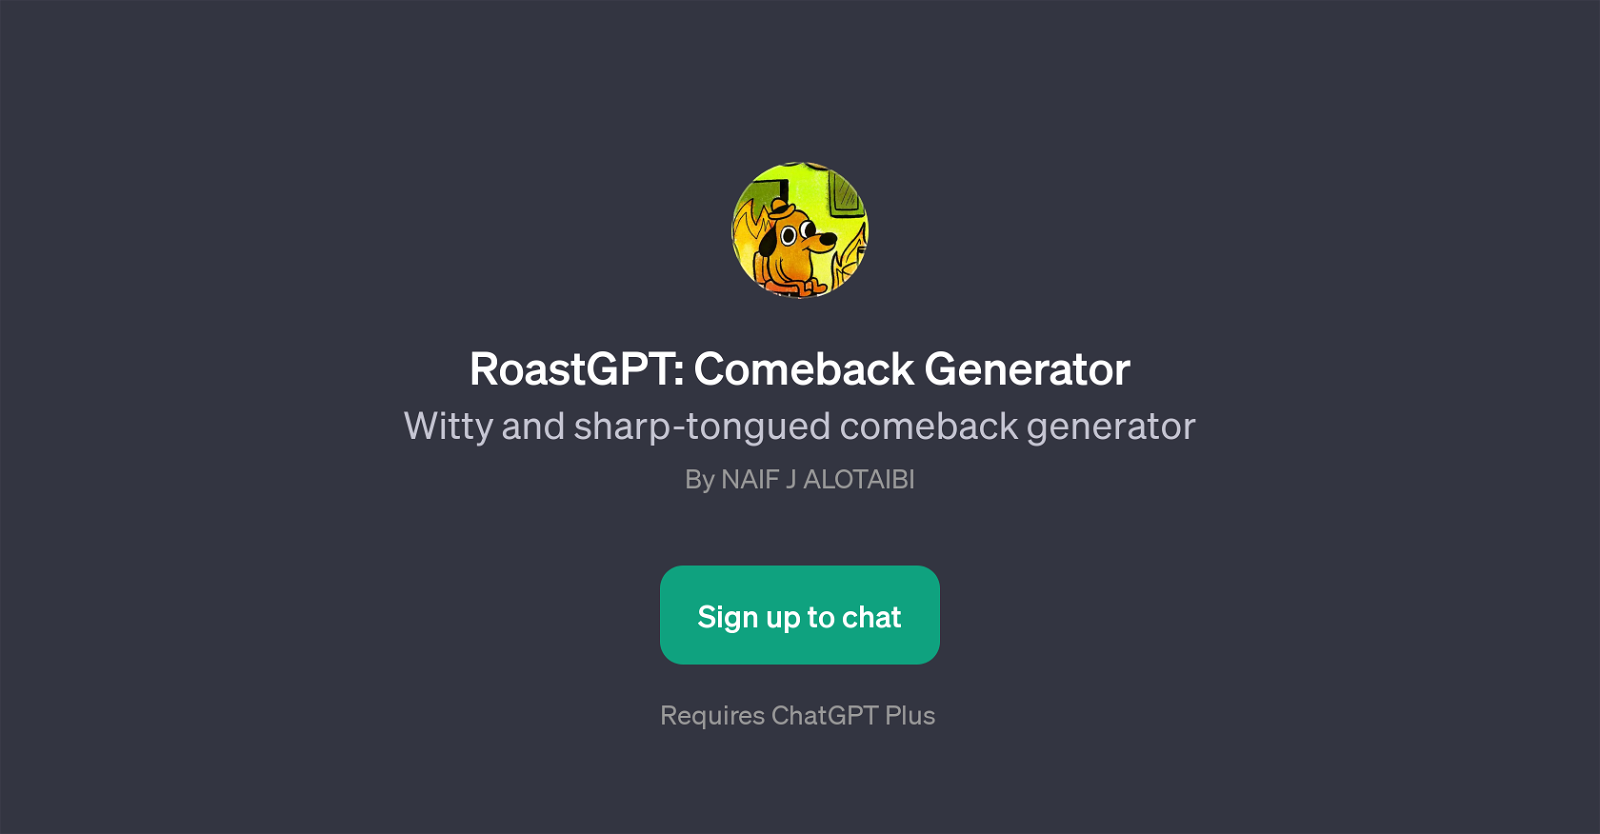 RoastGPT: Comeback Generator website